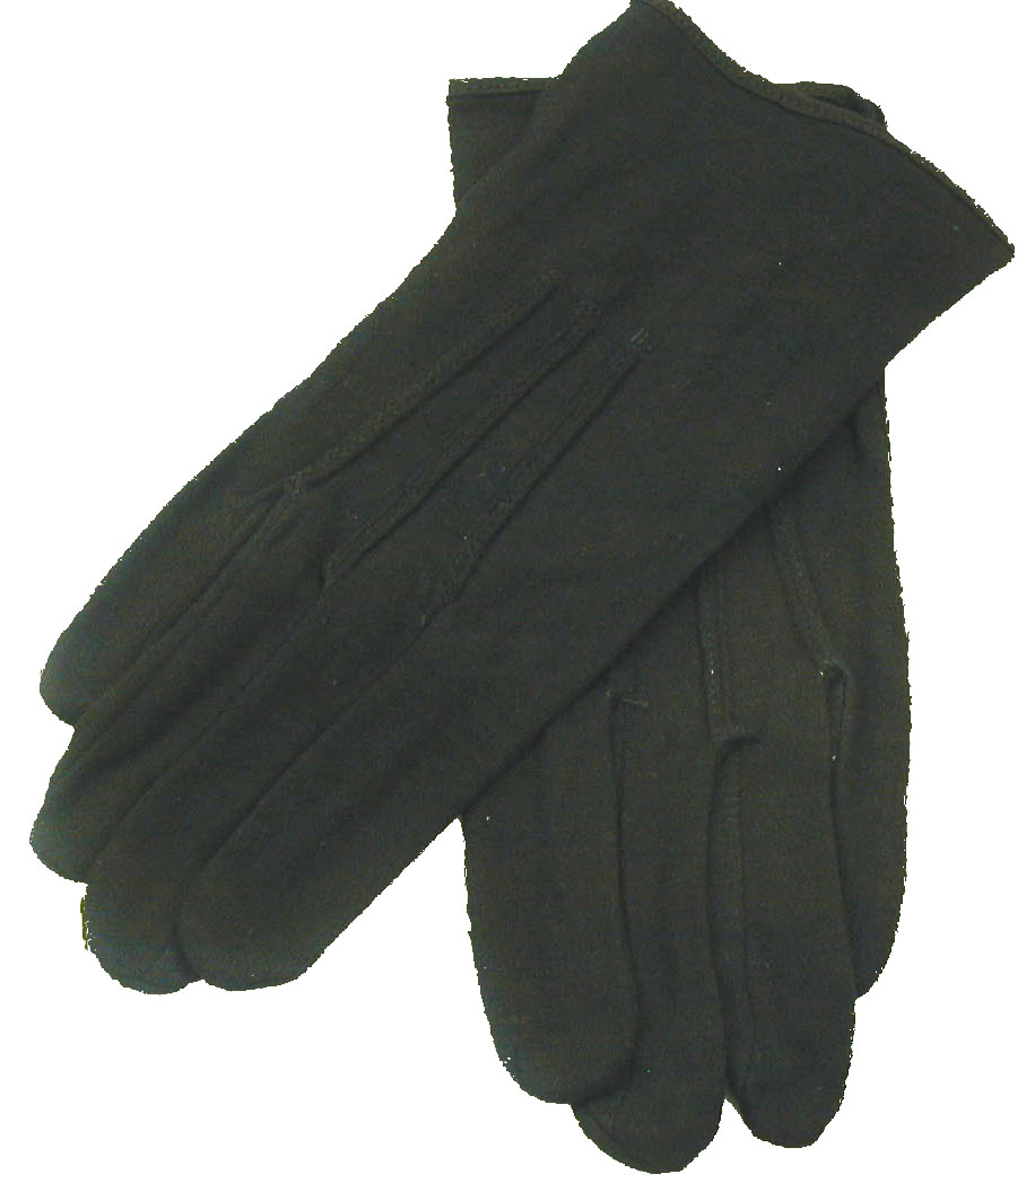 Black Nylon Snap Gloves